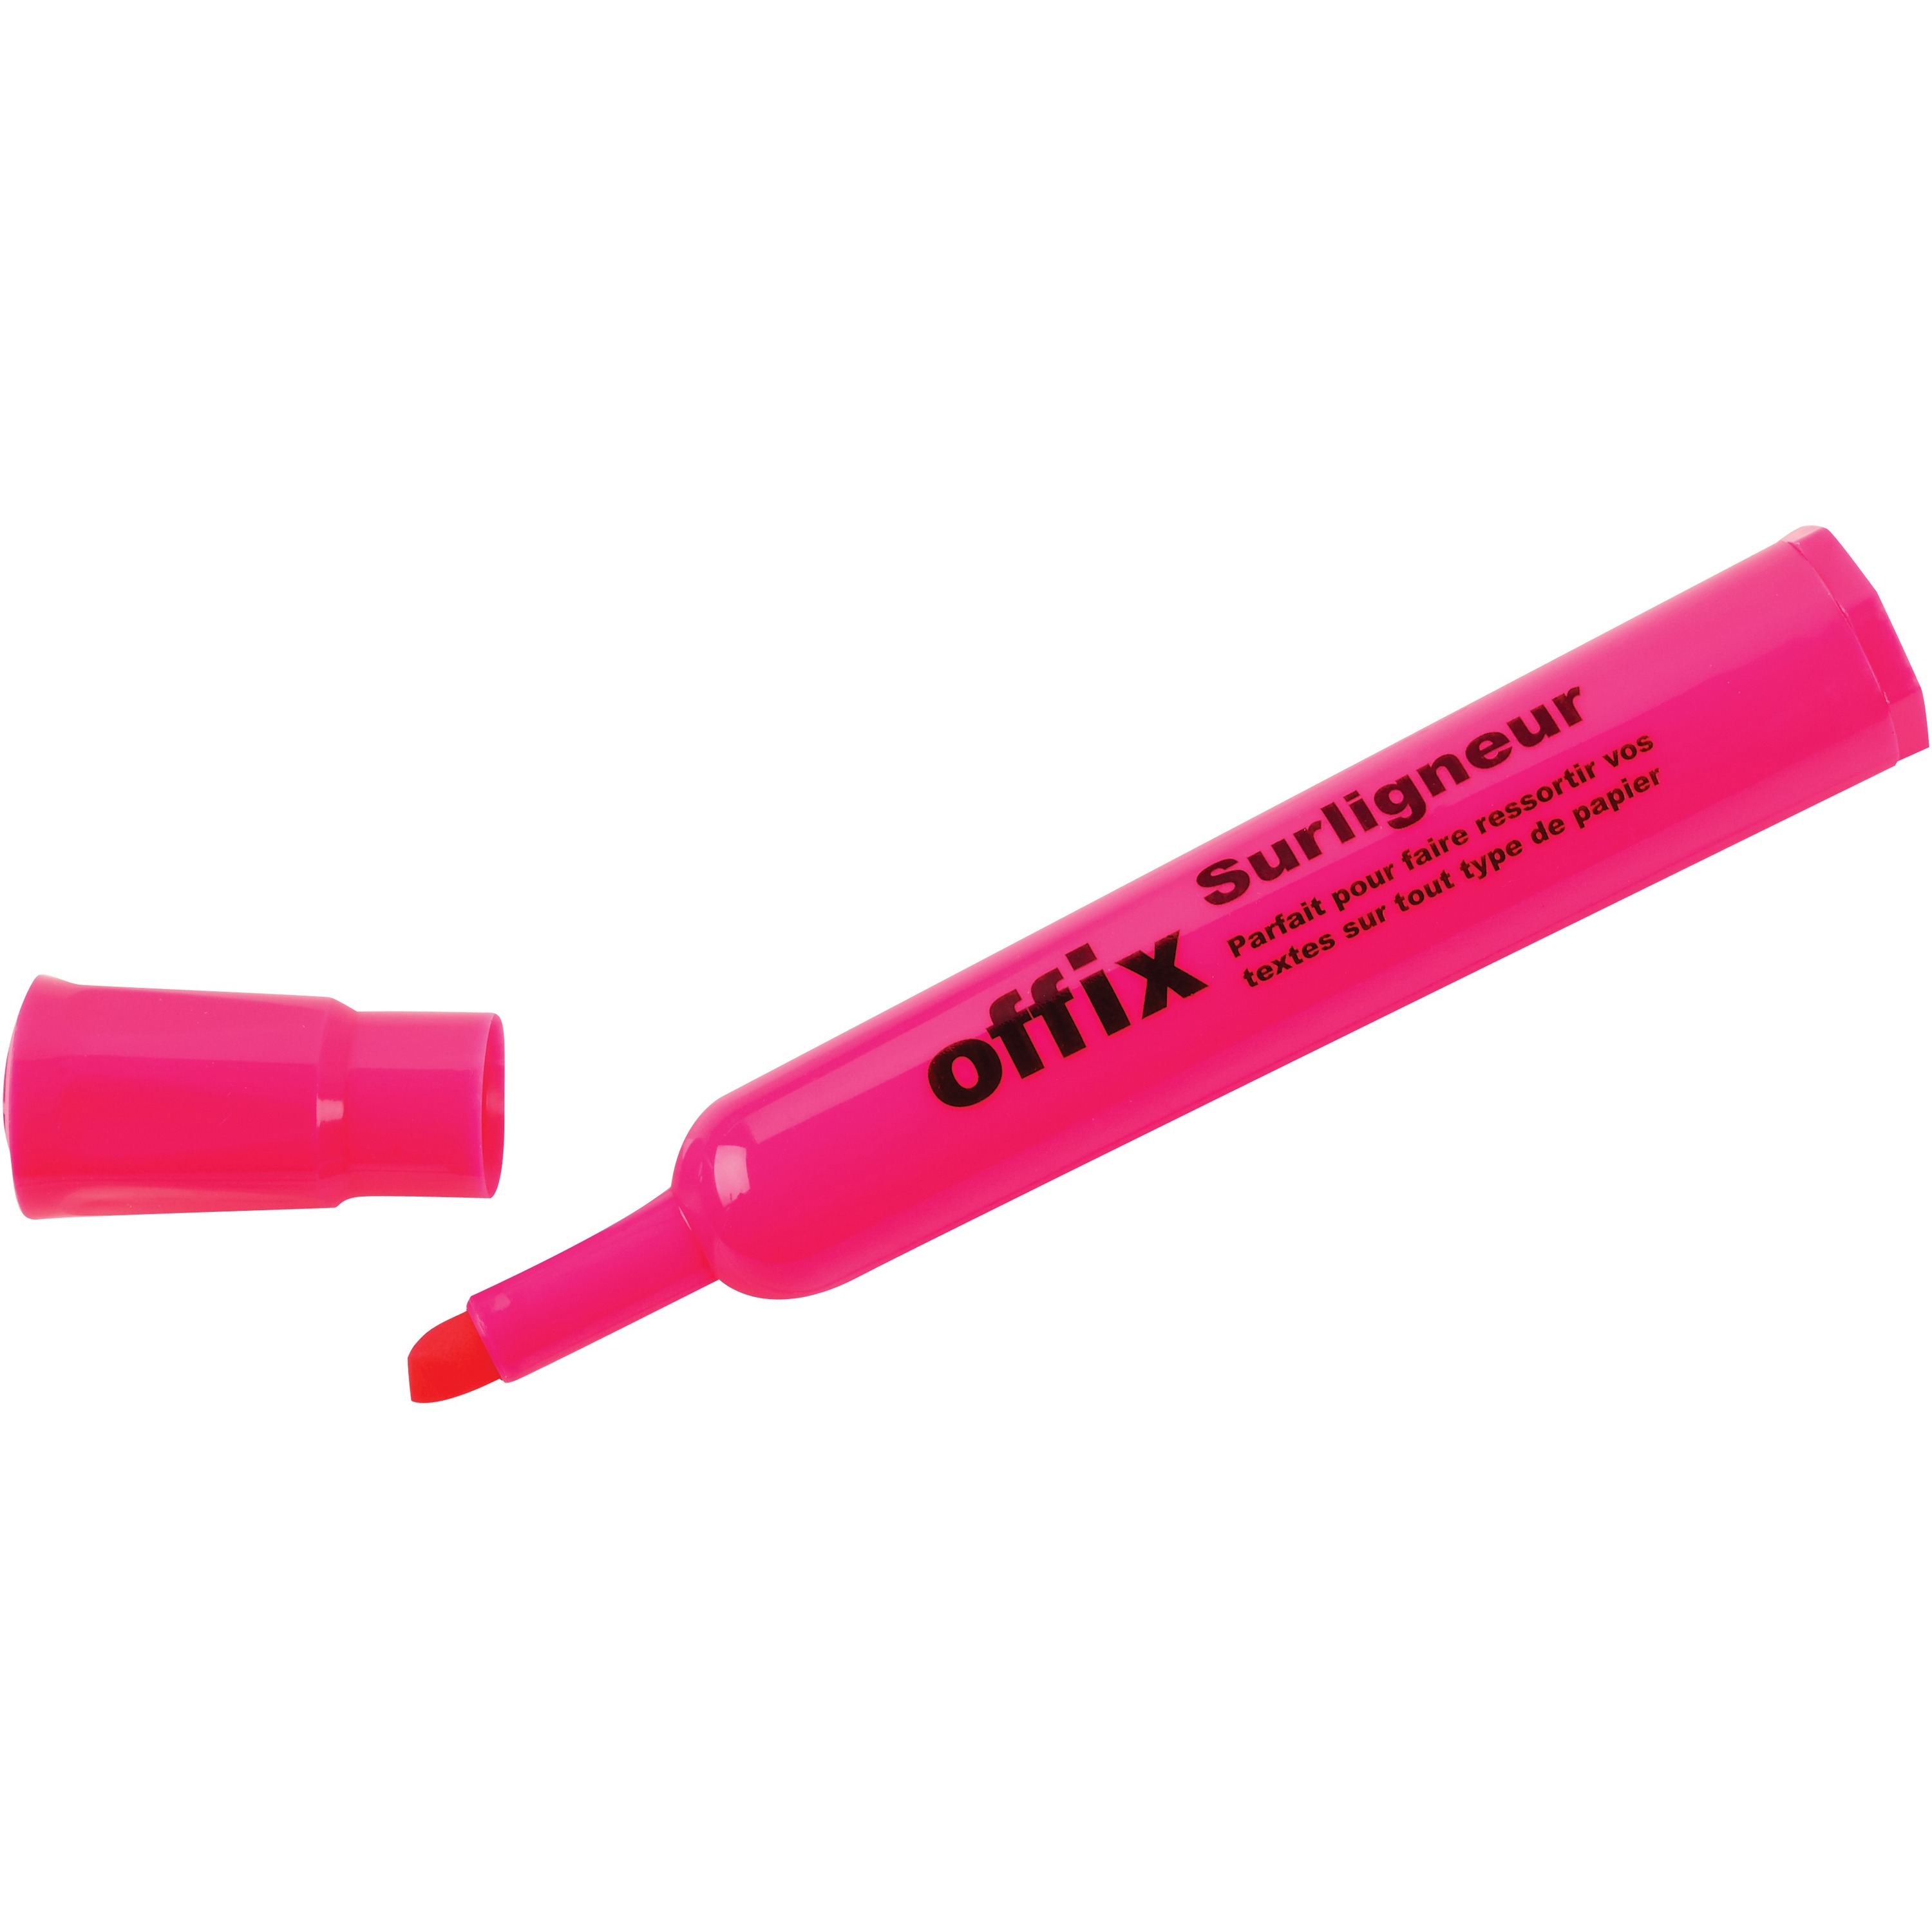 Offix Highlighter - Chisel Marker Point Style - Pink - 1 Dozen